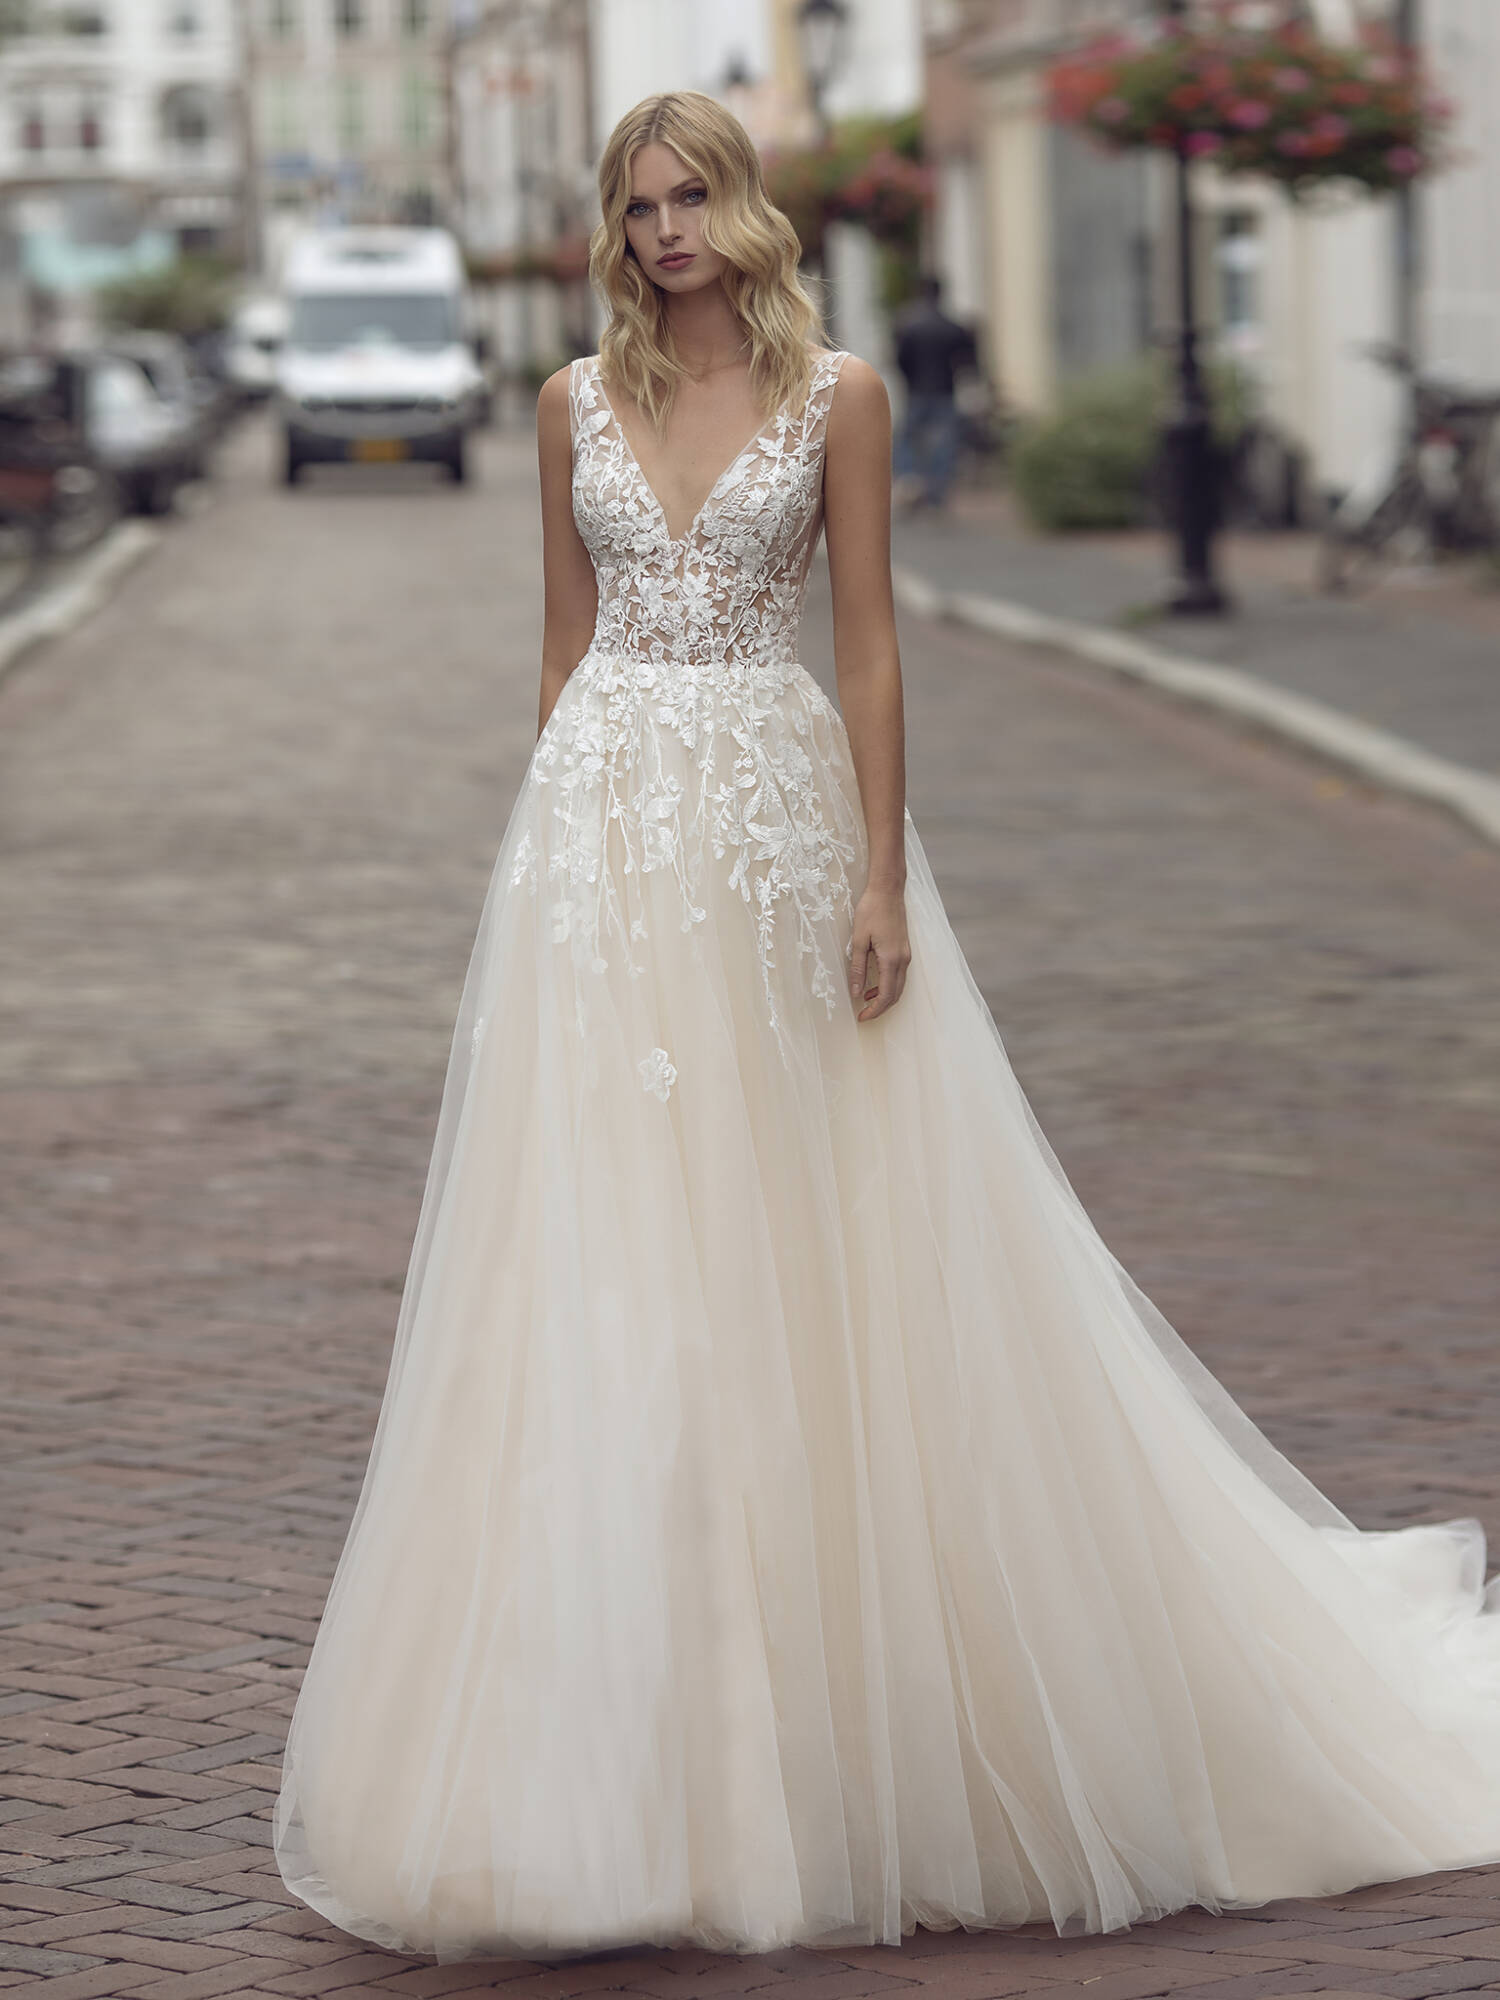 Modeca by Kathleen Richmond : Bridal Wedding Dress Shop Ayrshire